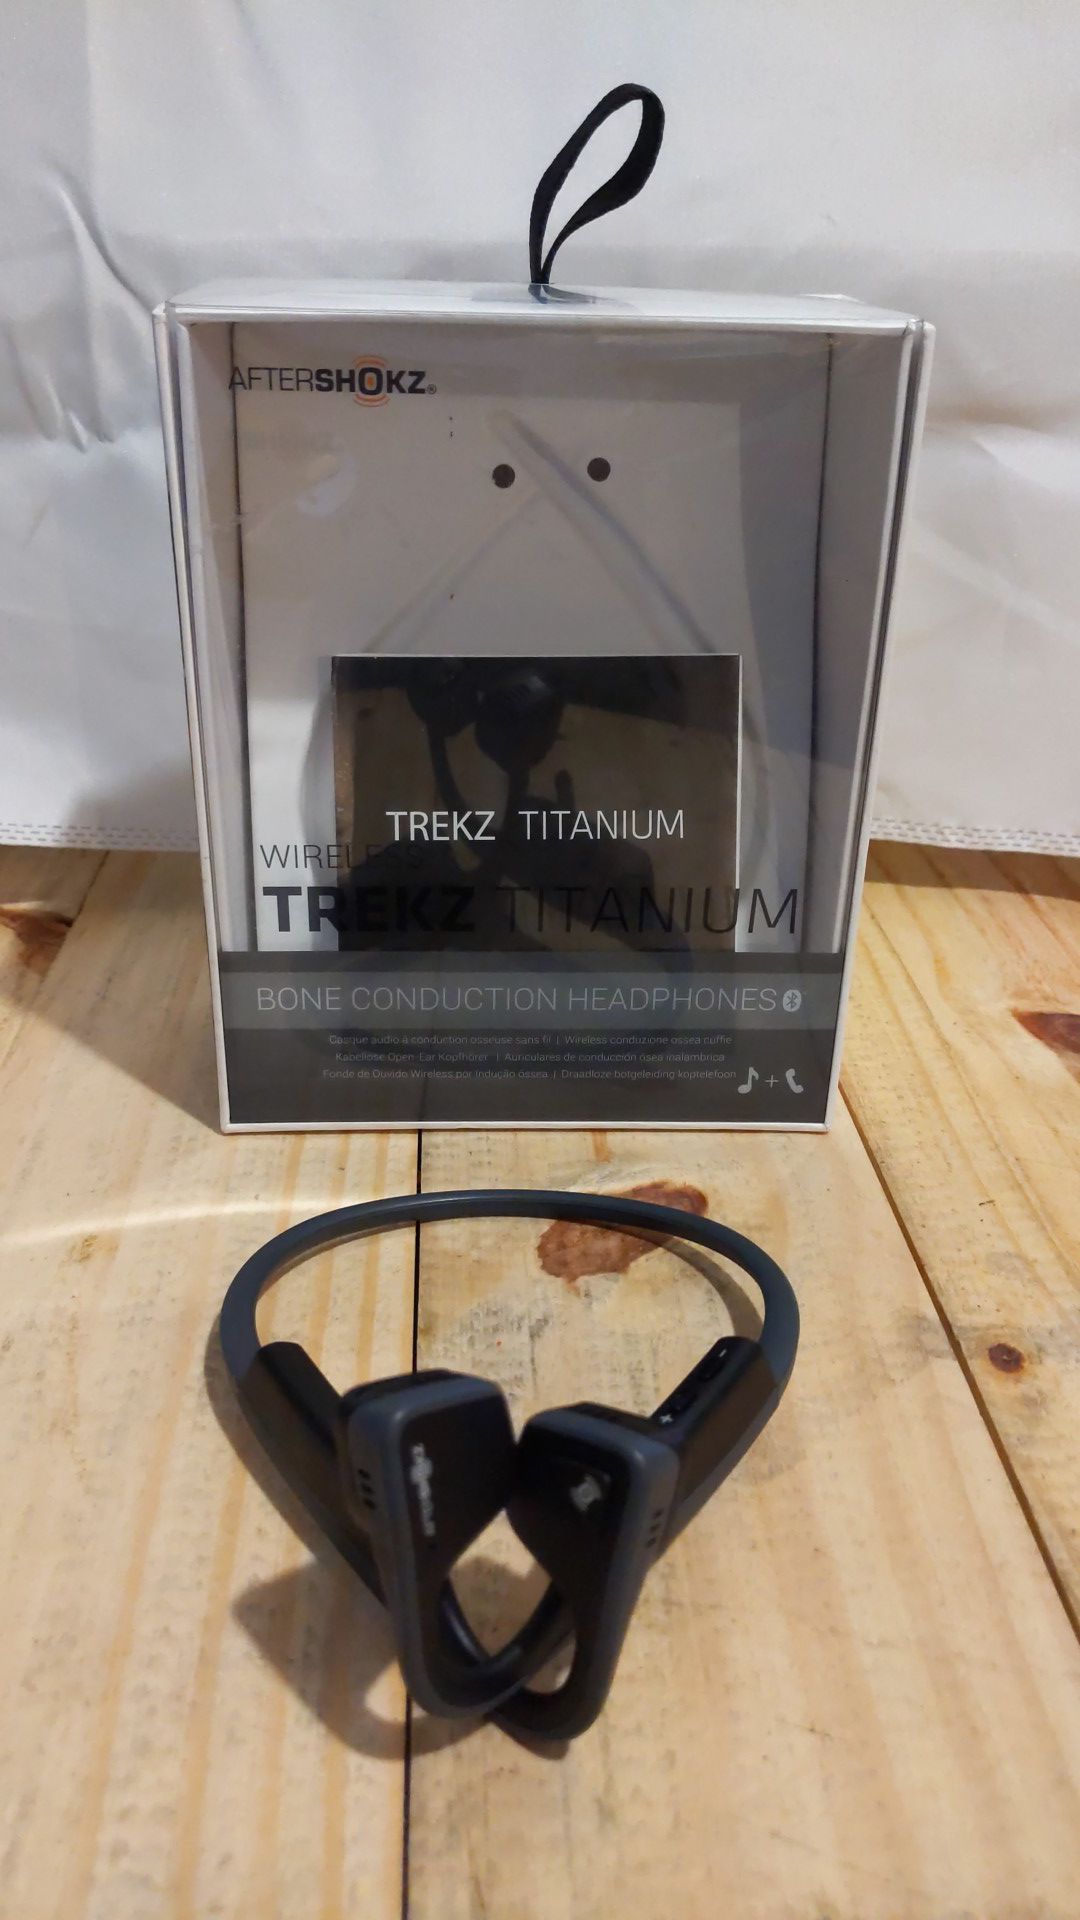 Trekz titanium Wireless bone conduction headphones